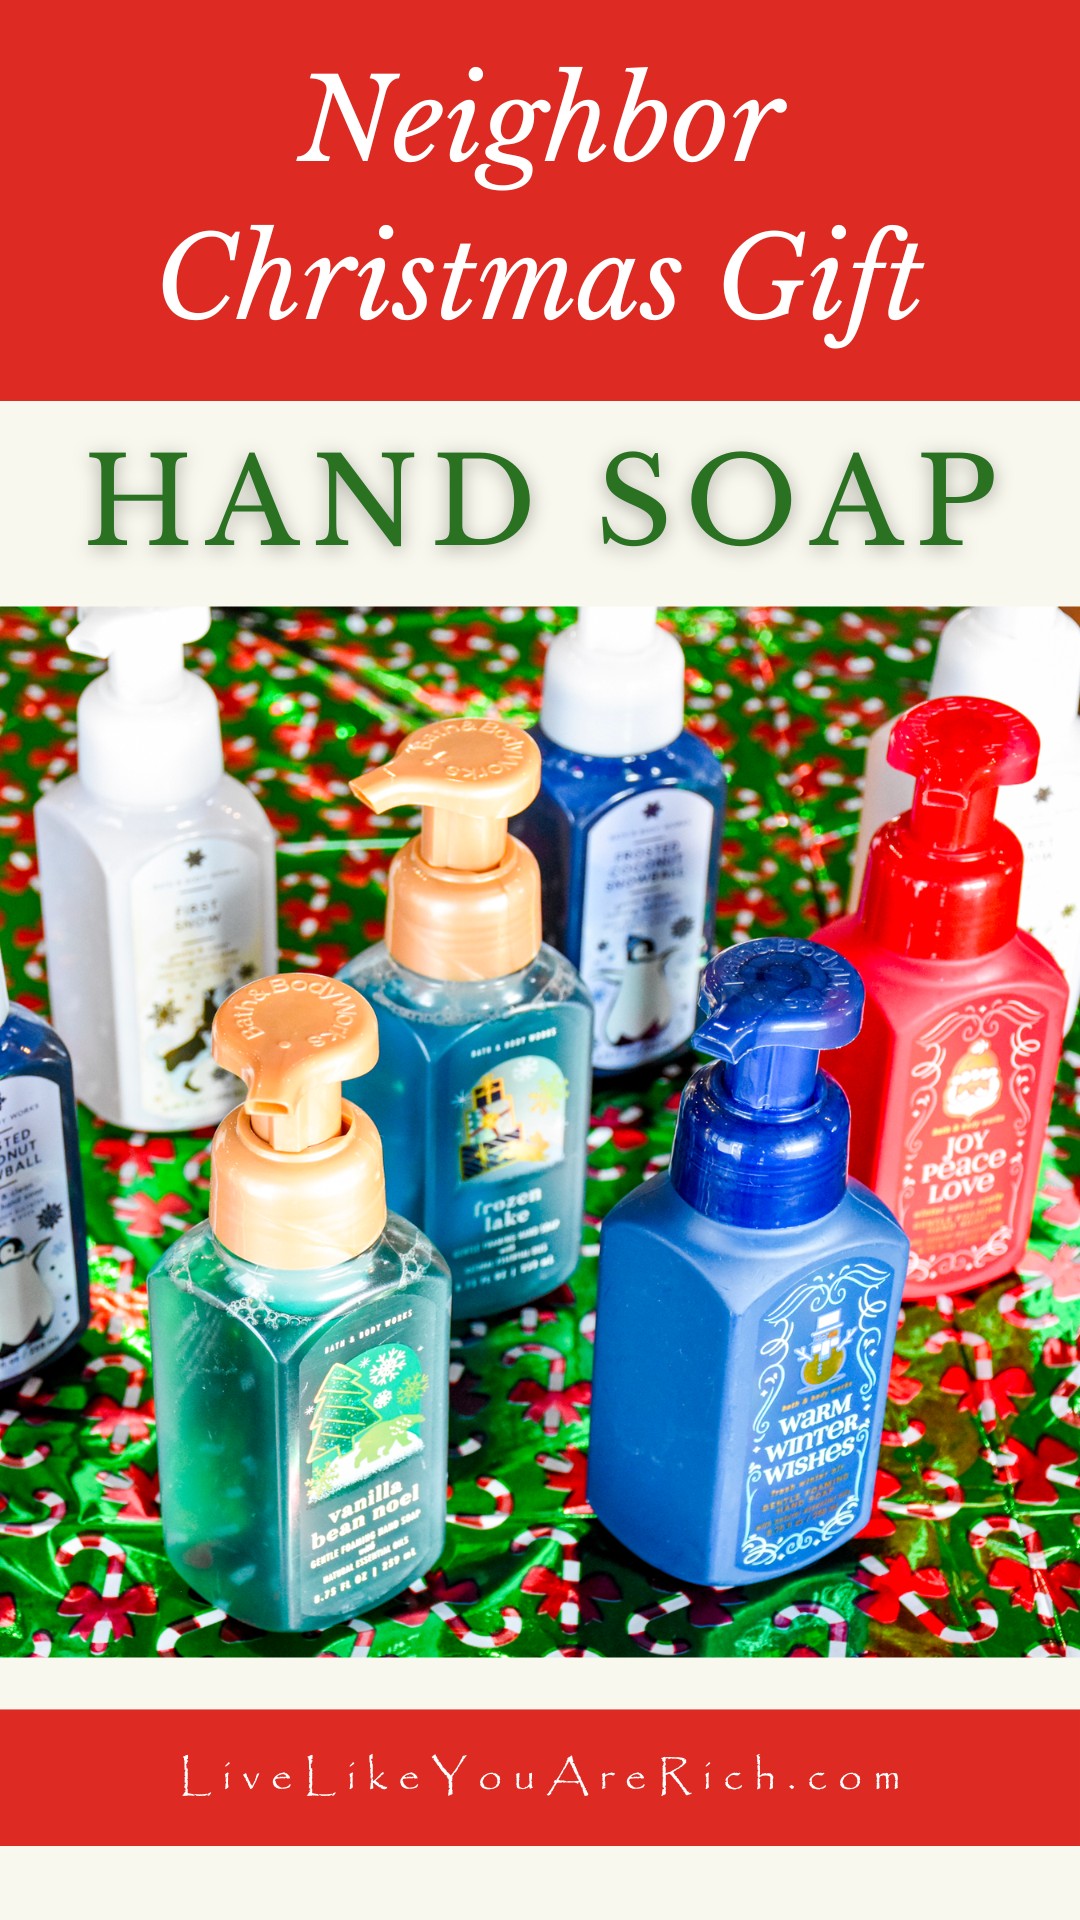 Neighbor Christmas Gift: Hand Soap